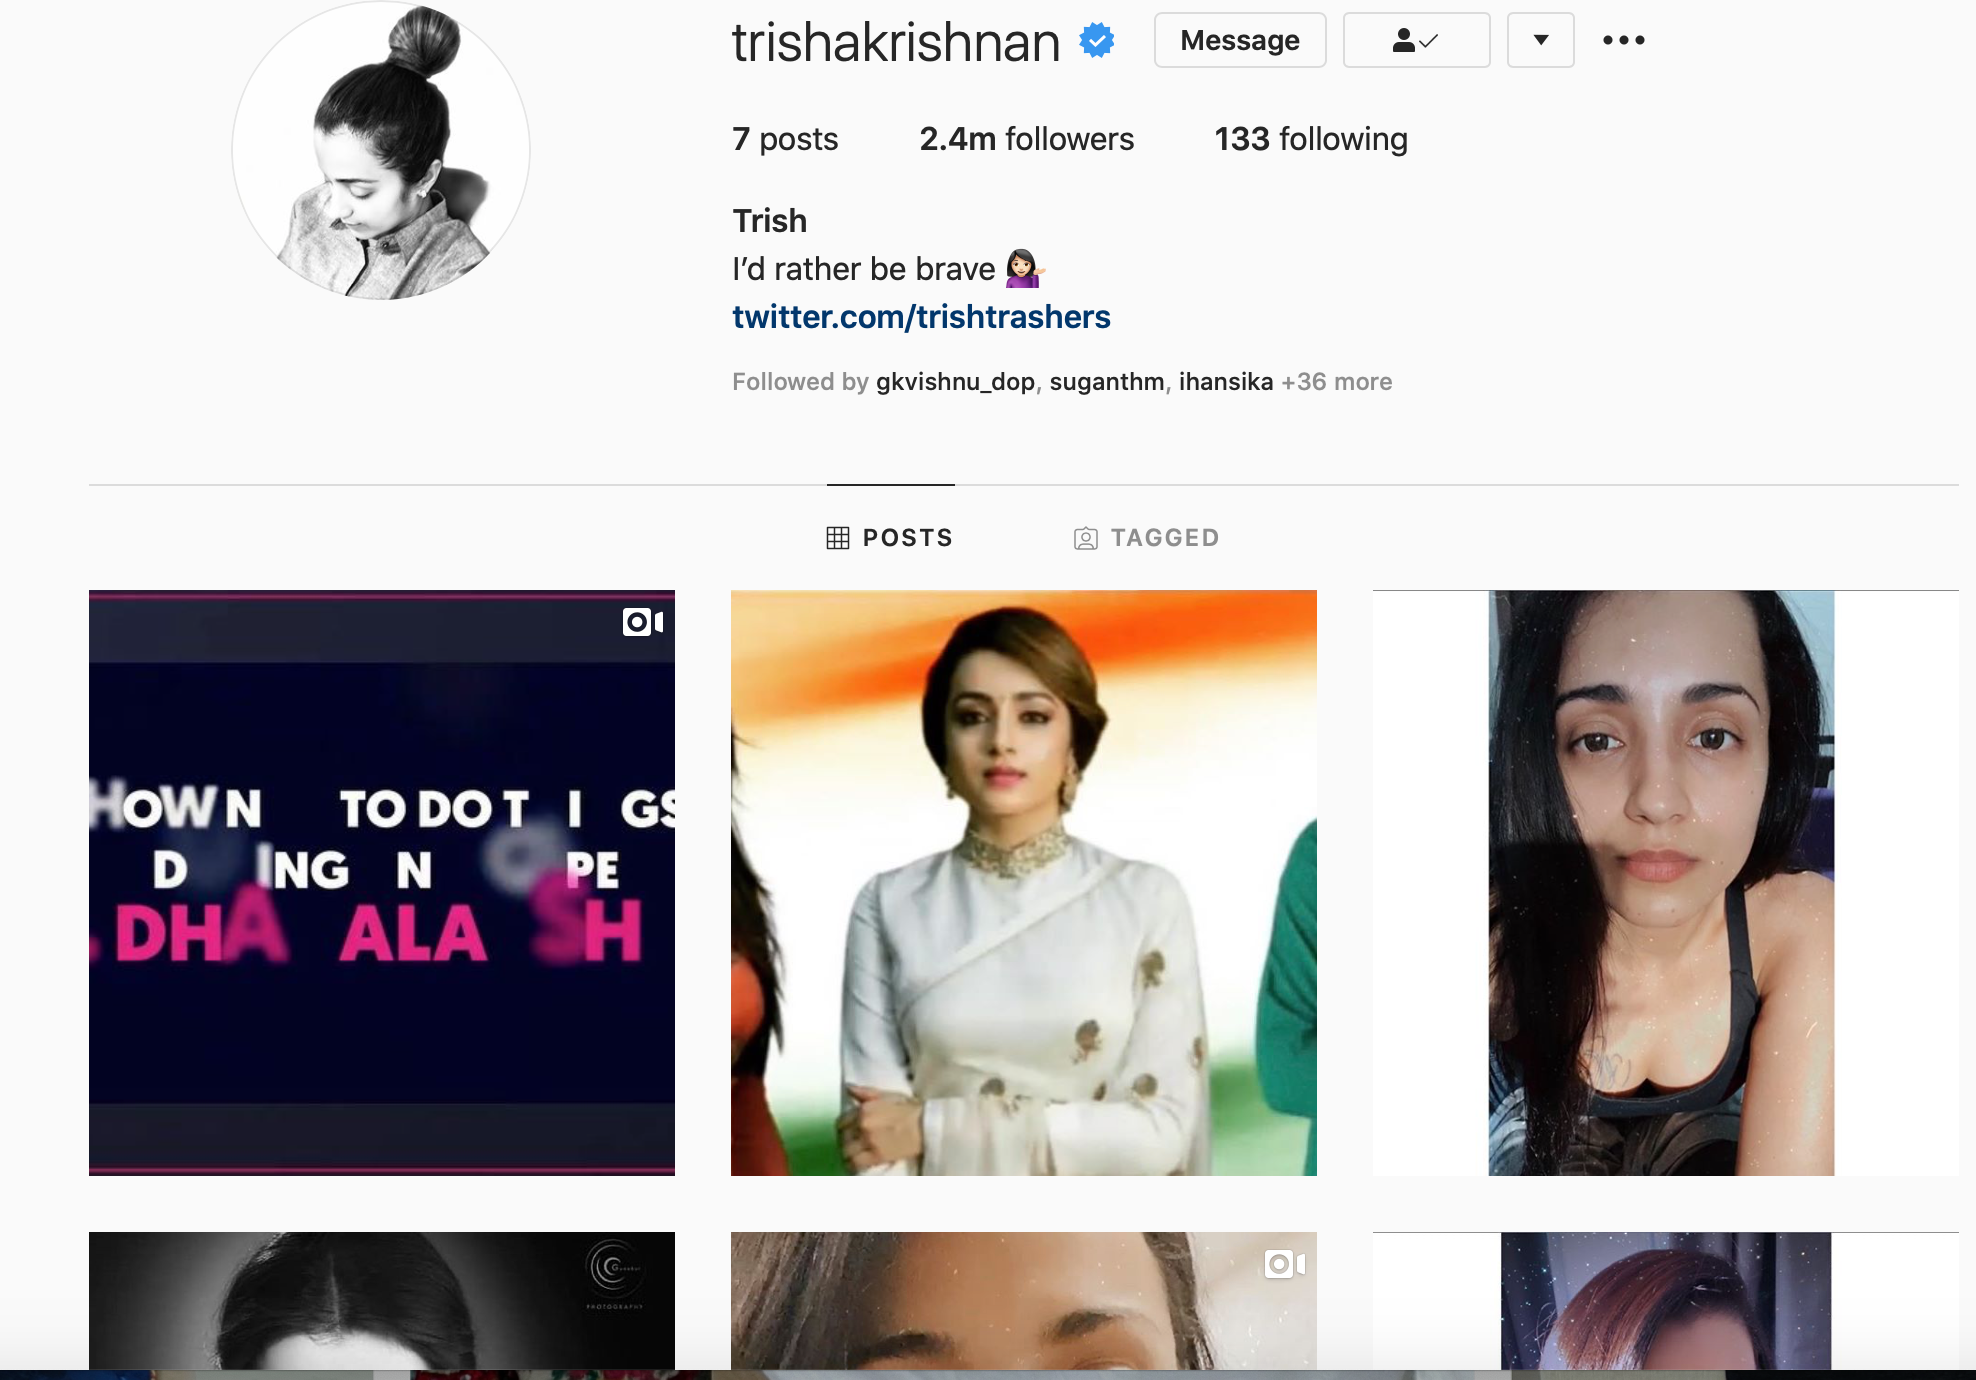 Why did Trisha delete her posts on Instagram?  